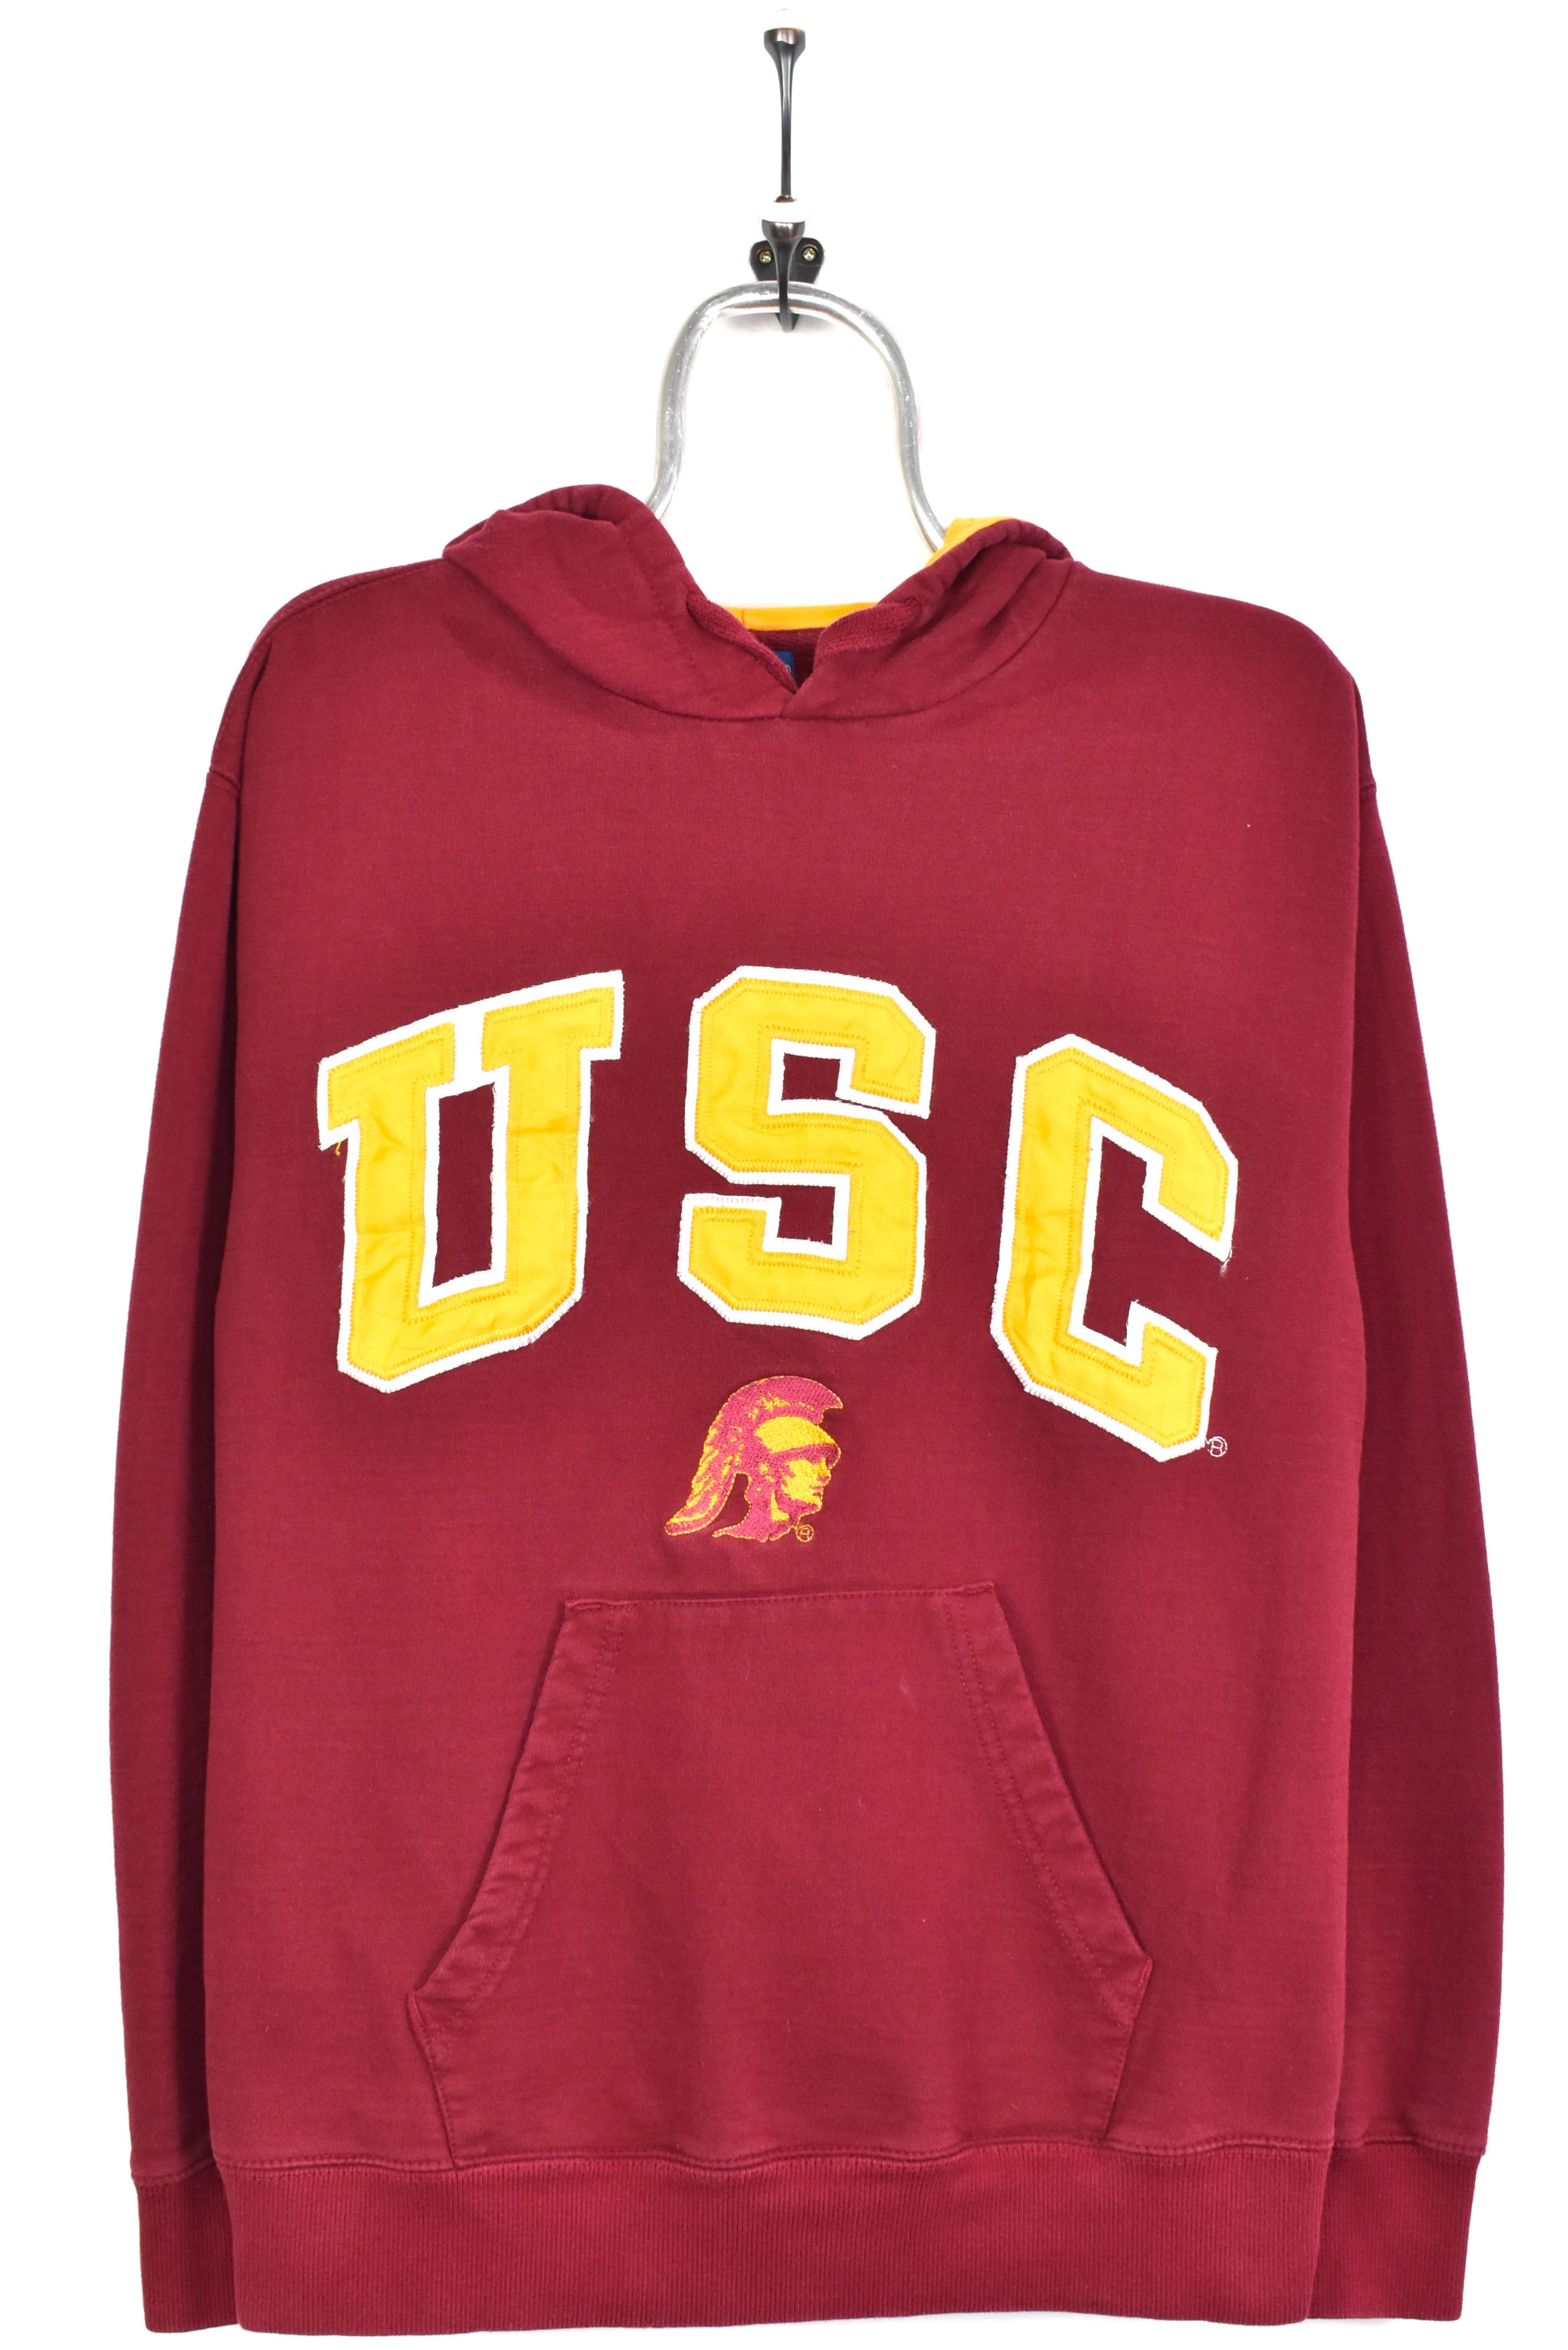 Vintage University of Southern California hoodie, Trojans embroidered sweatshirt - medium COLLEGE